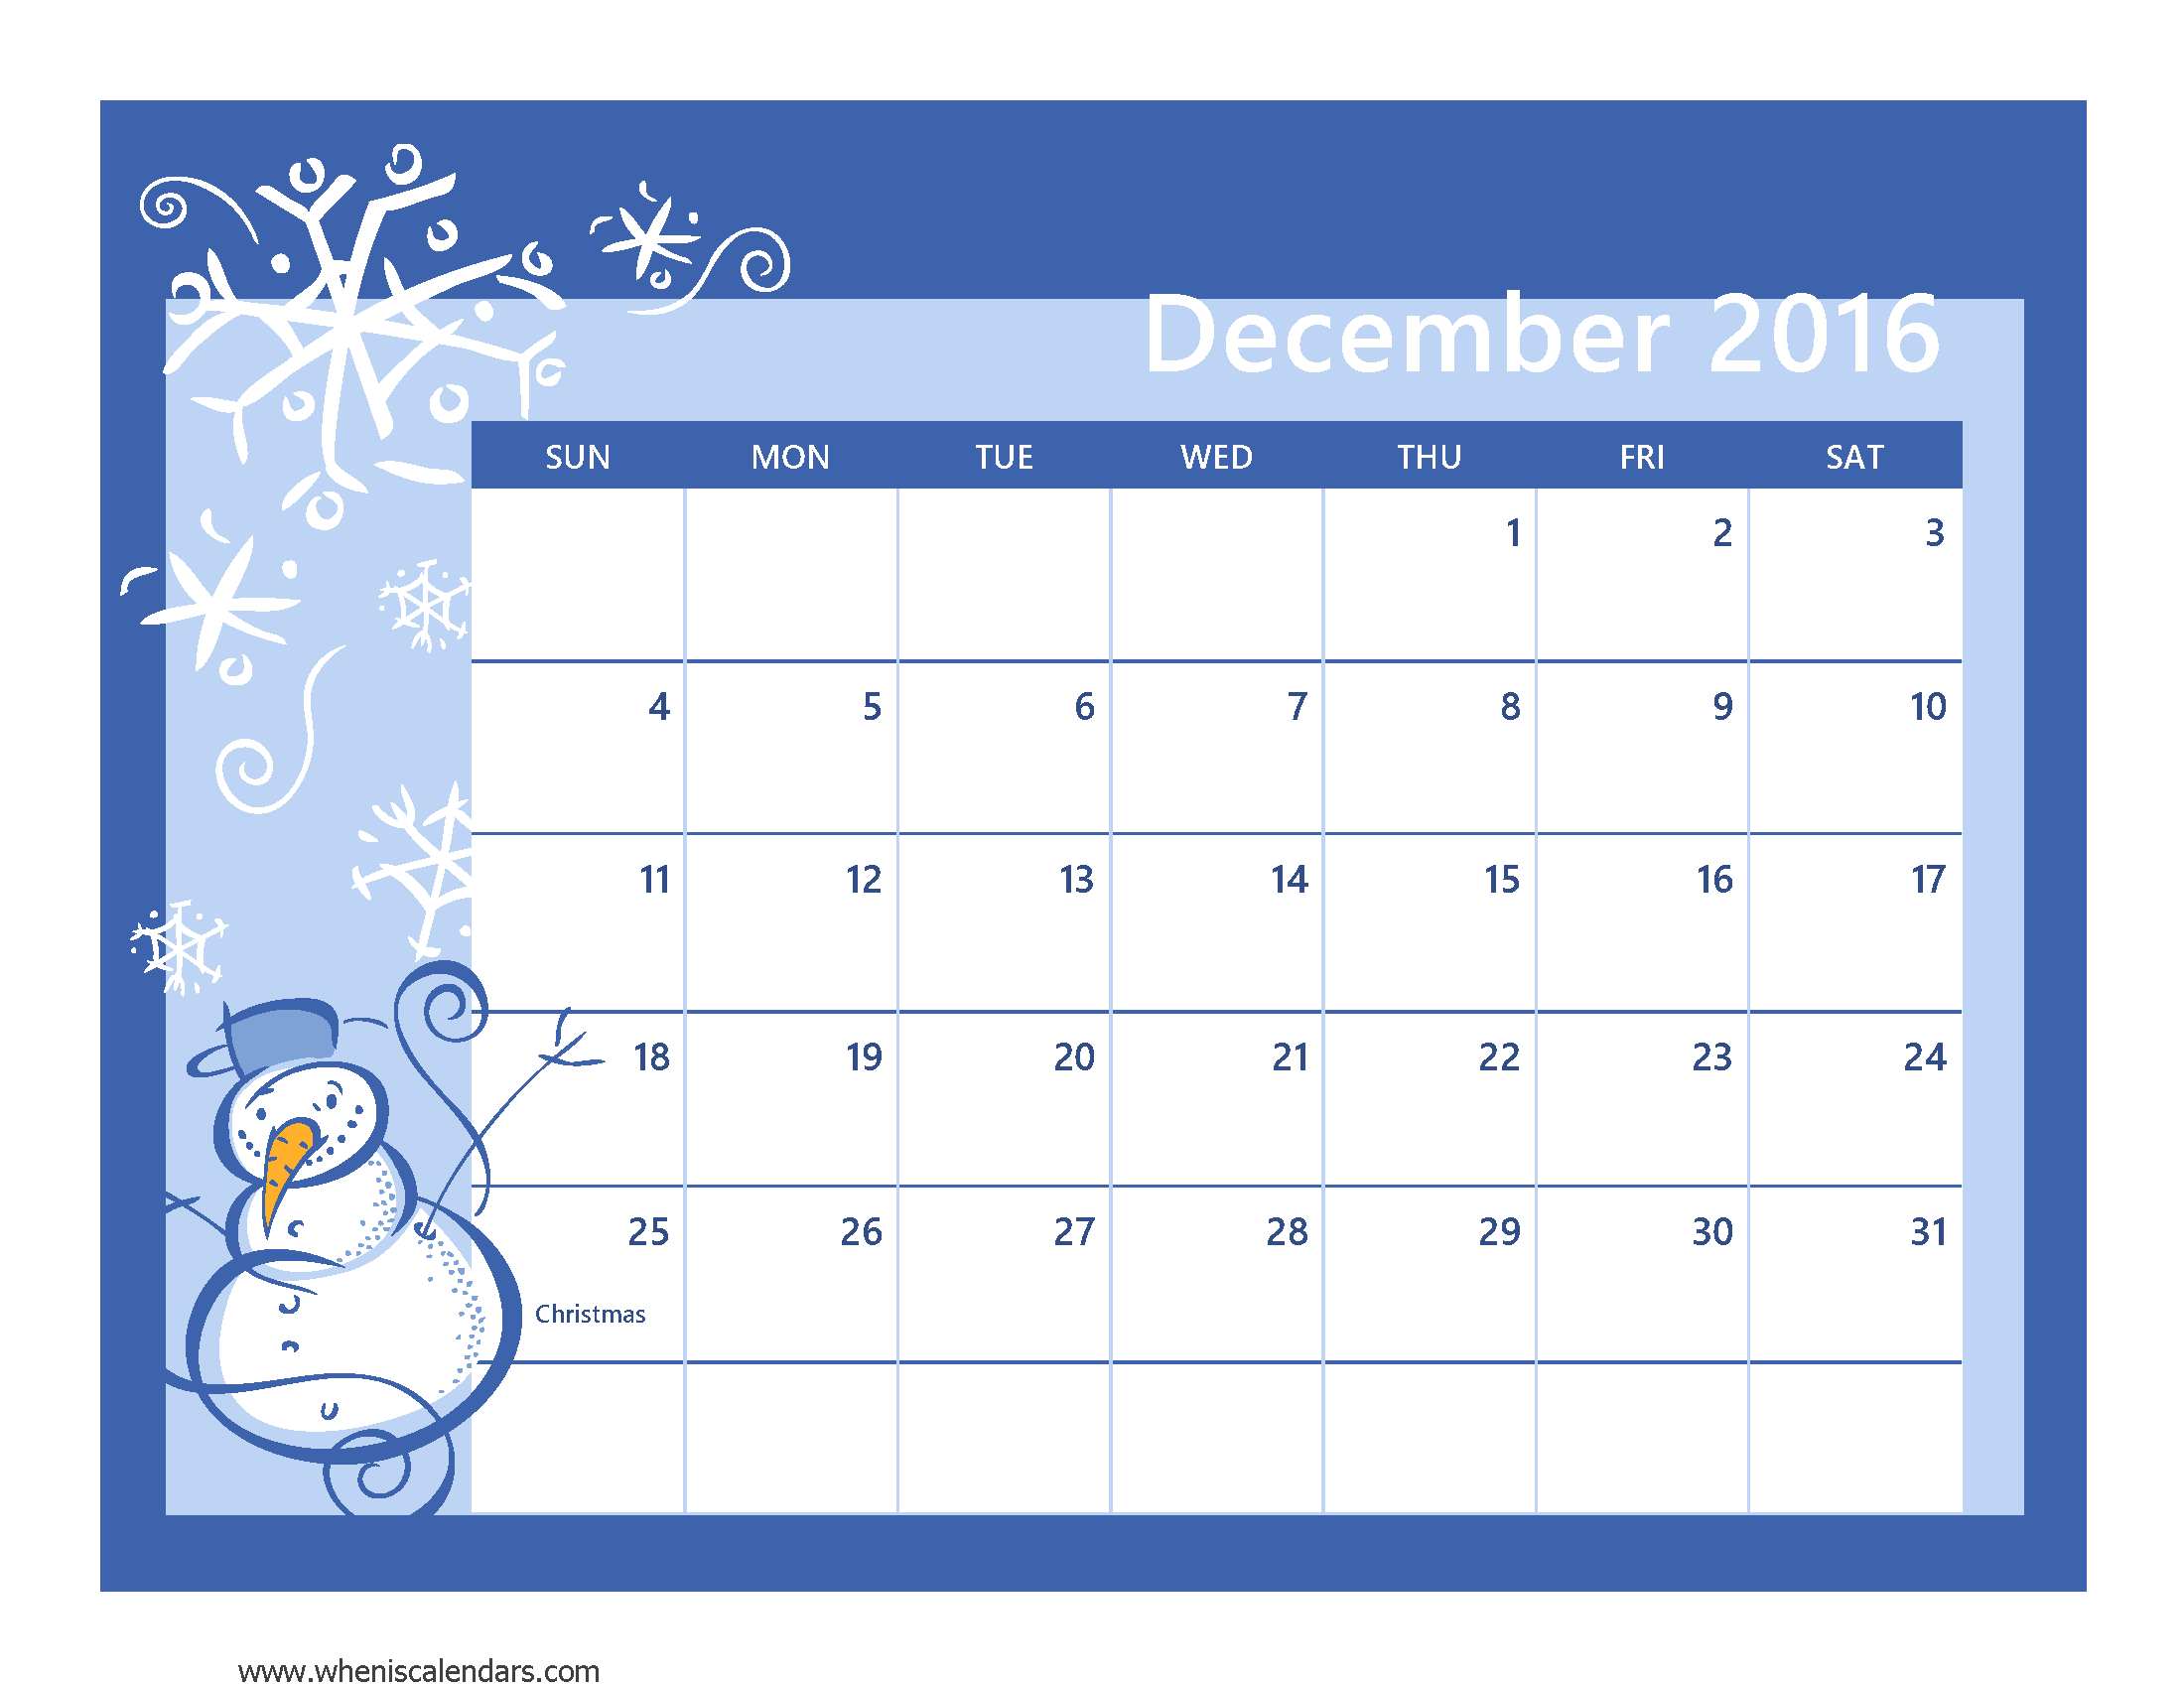 December 2016 Calendar Printable With Holidays | 2017 calendar 